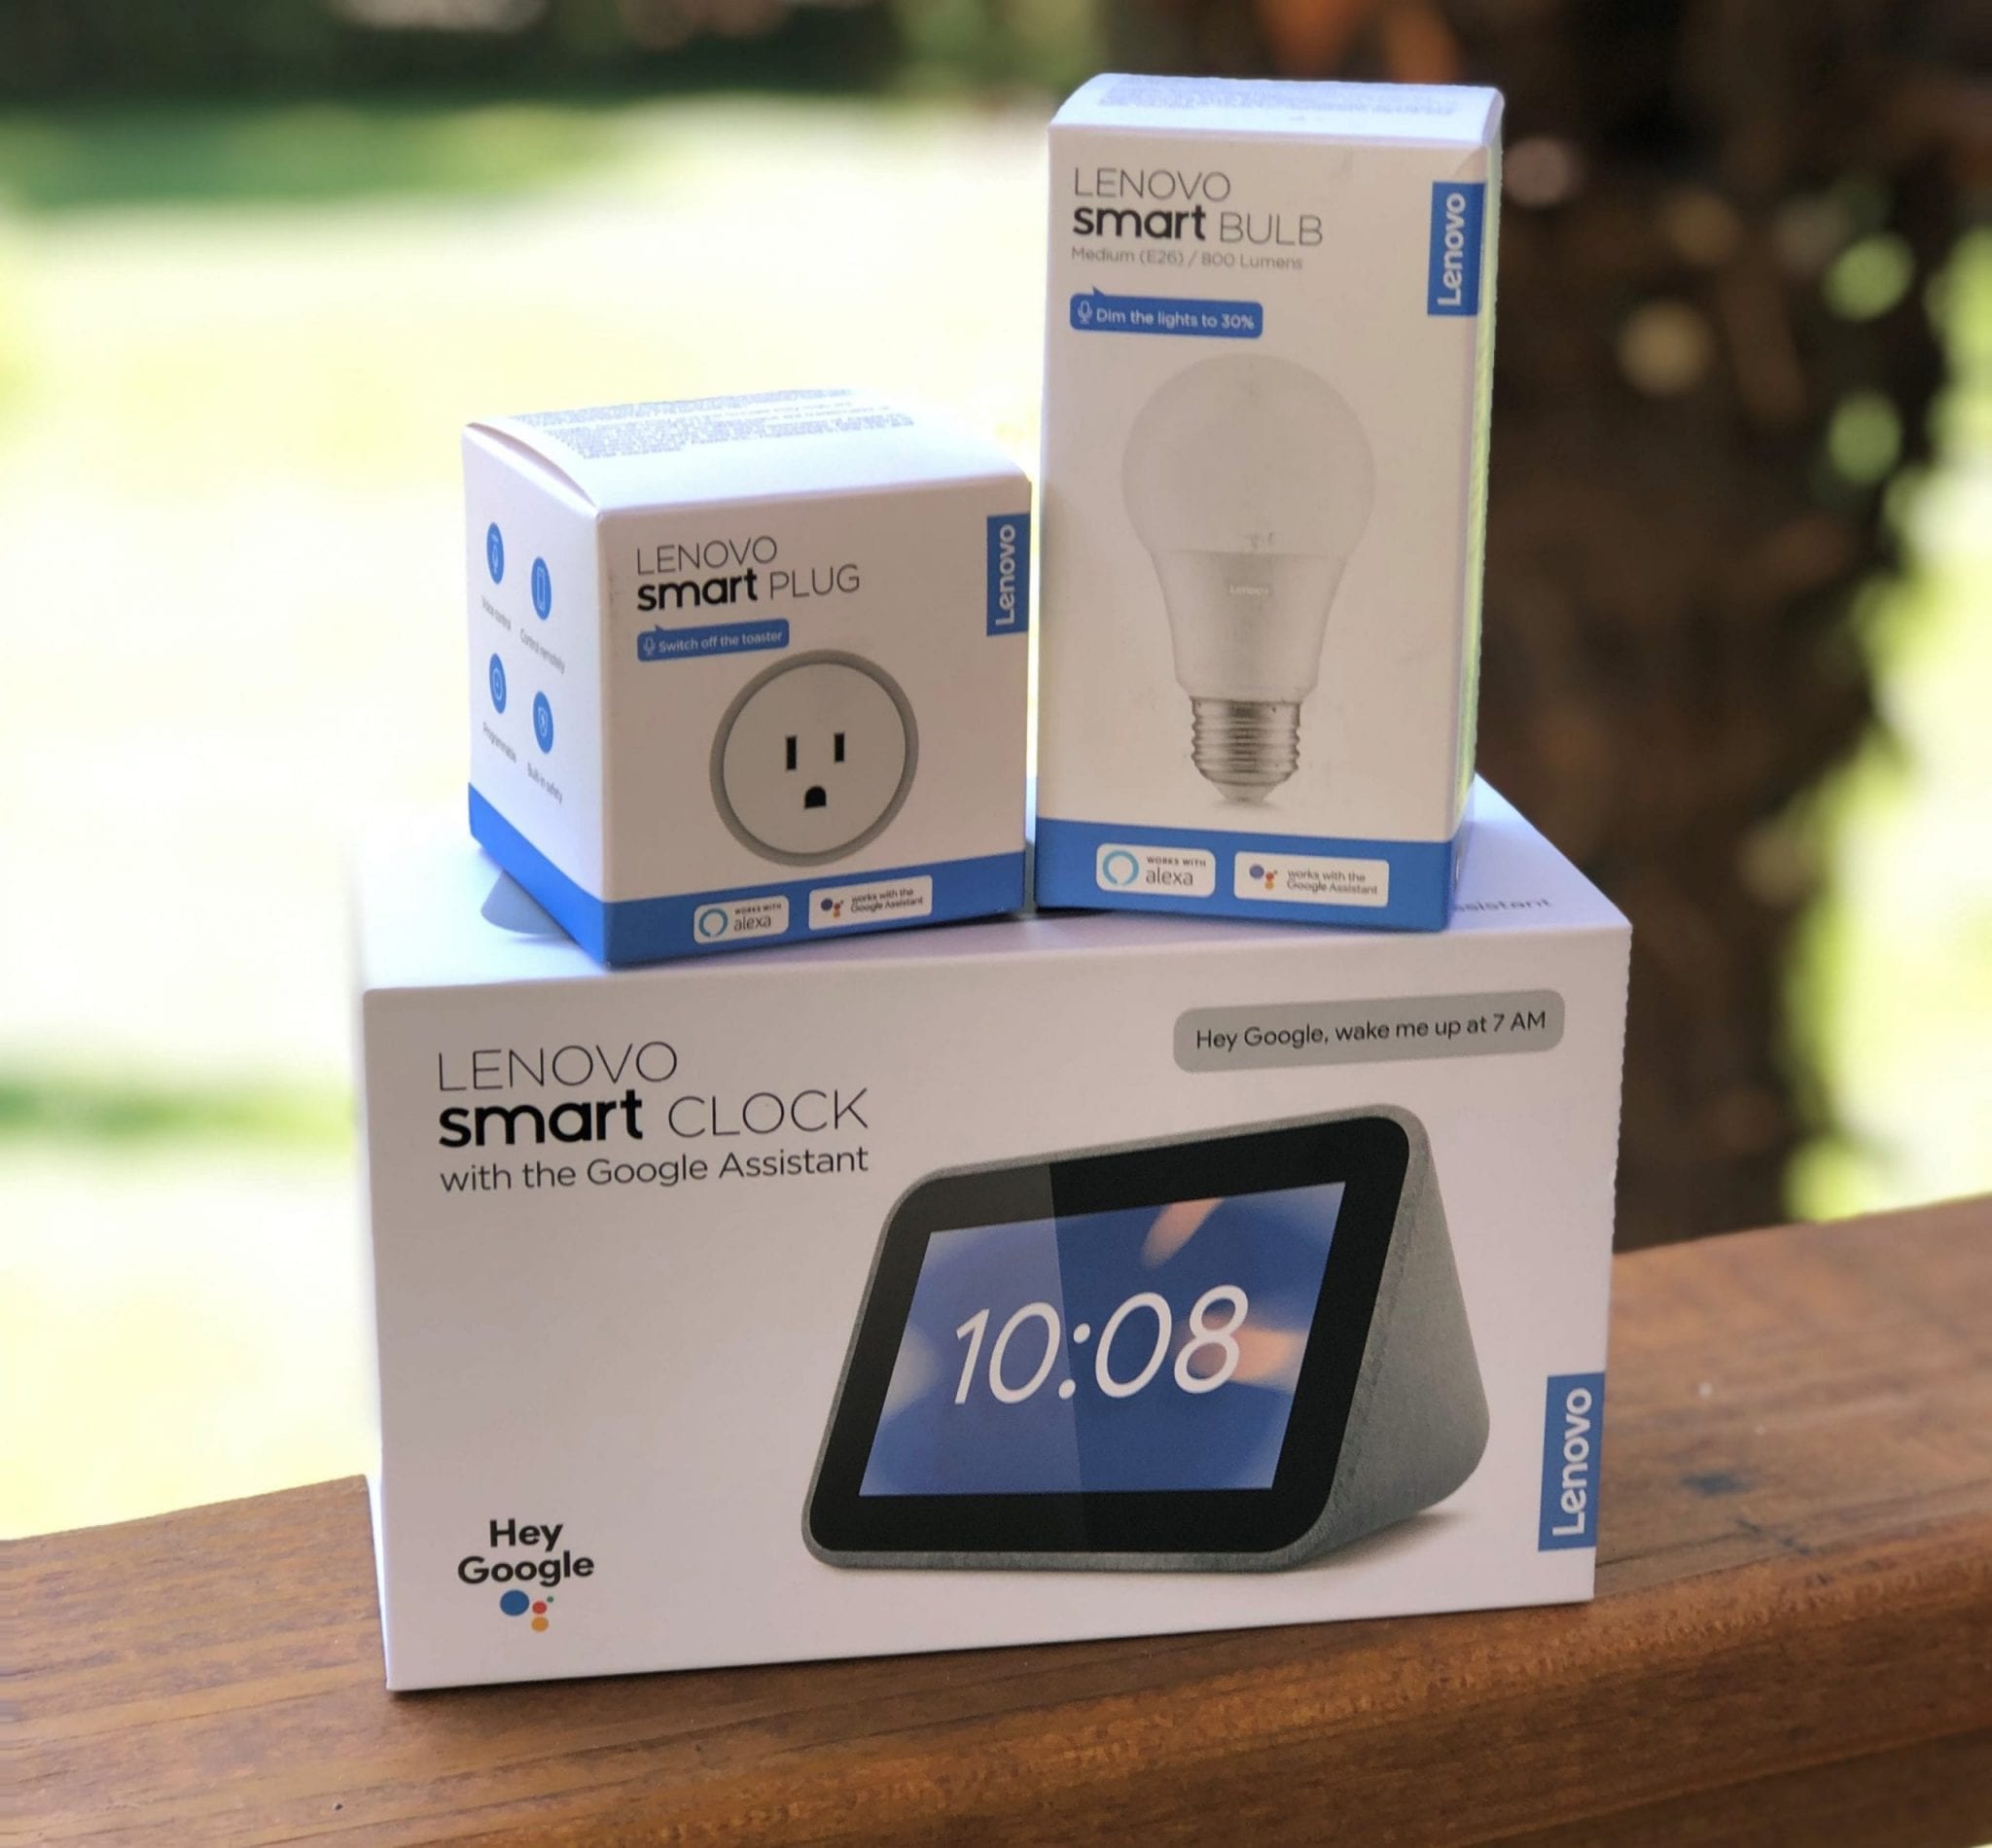 Lenovo Smart Plug, Bulb and Clock reading to turn home to smart home